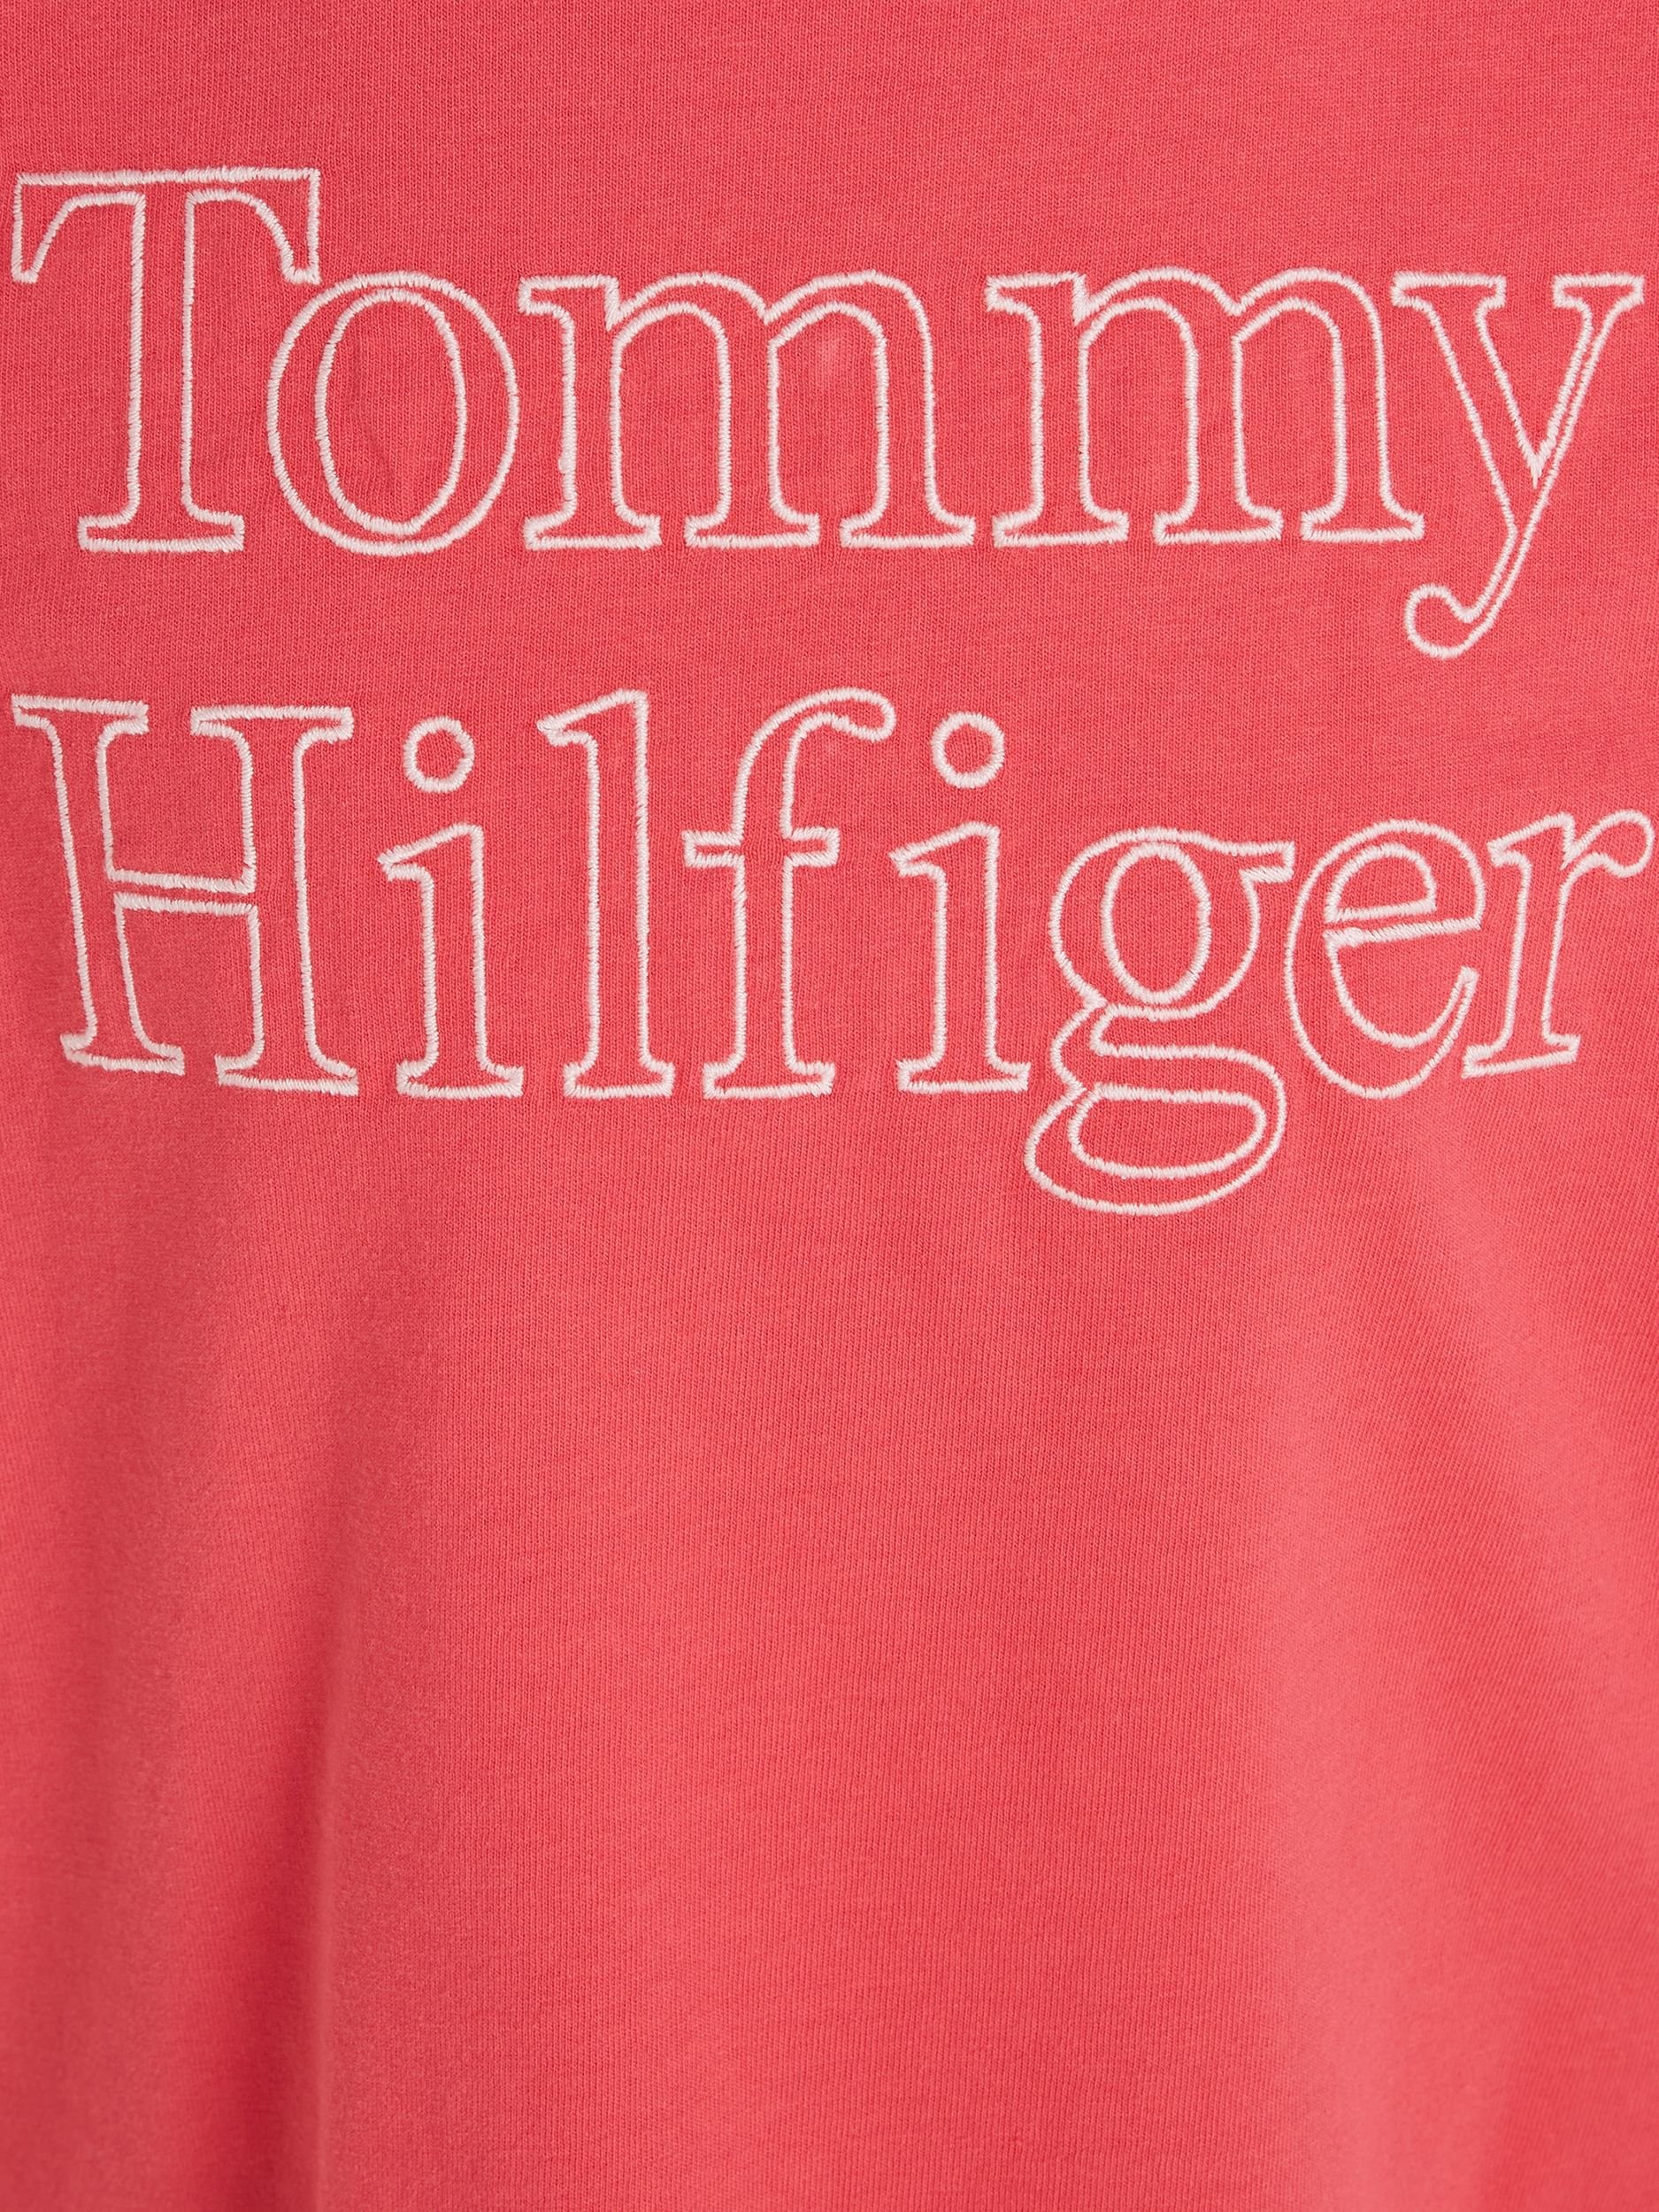 TOMMY HILFIGER STITCH TEE S/S